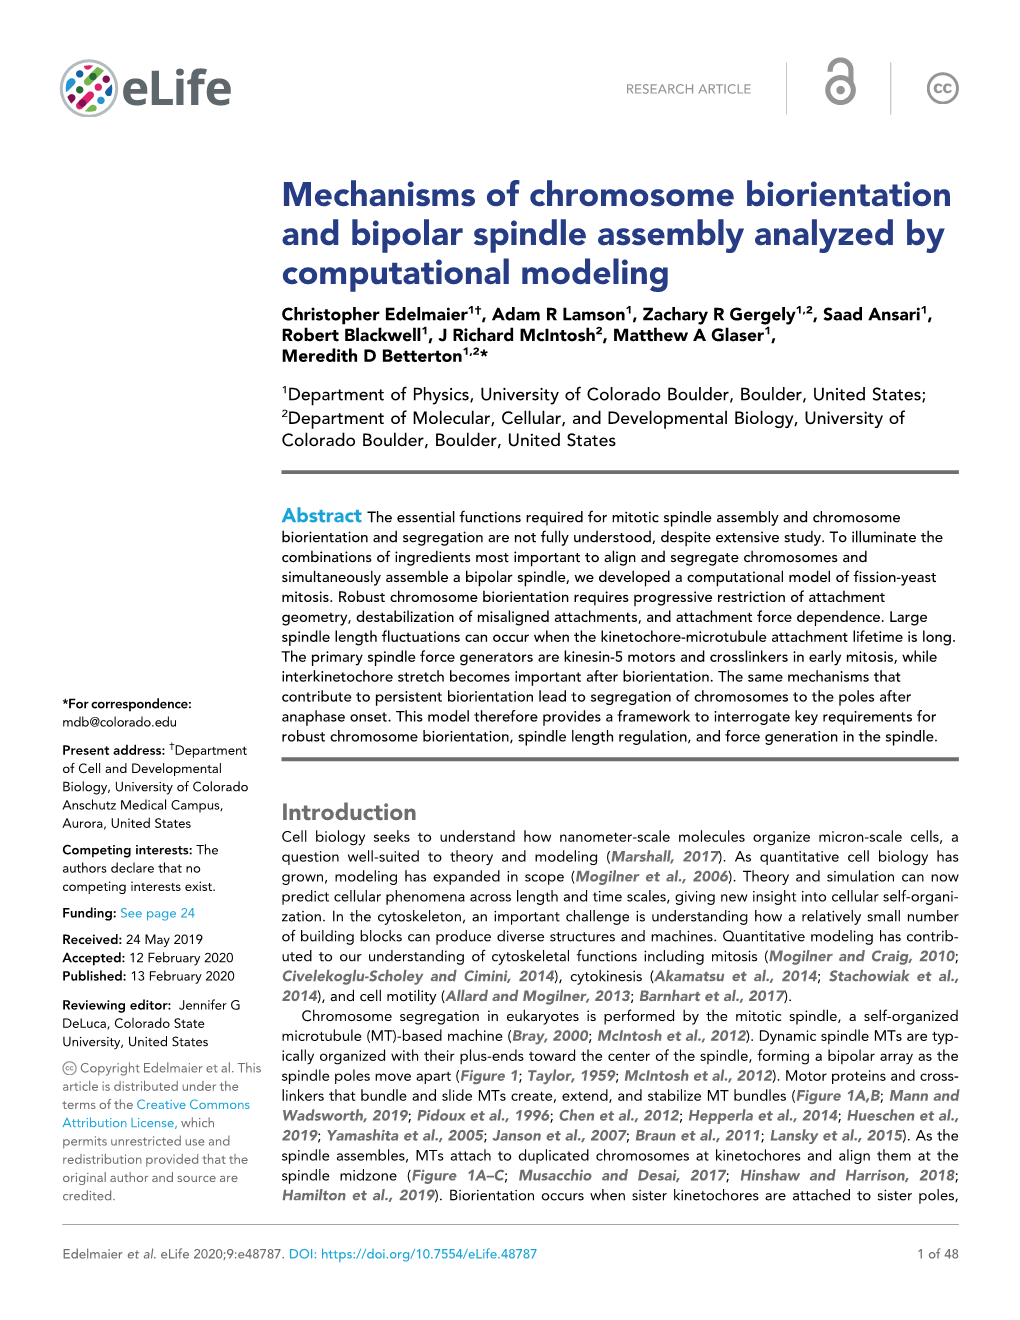 Mechanisms of Chromosome Biorientation and Bipolar